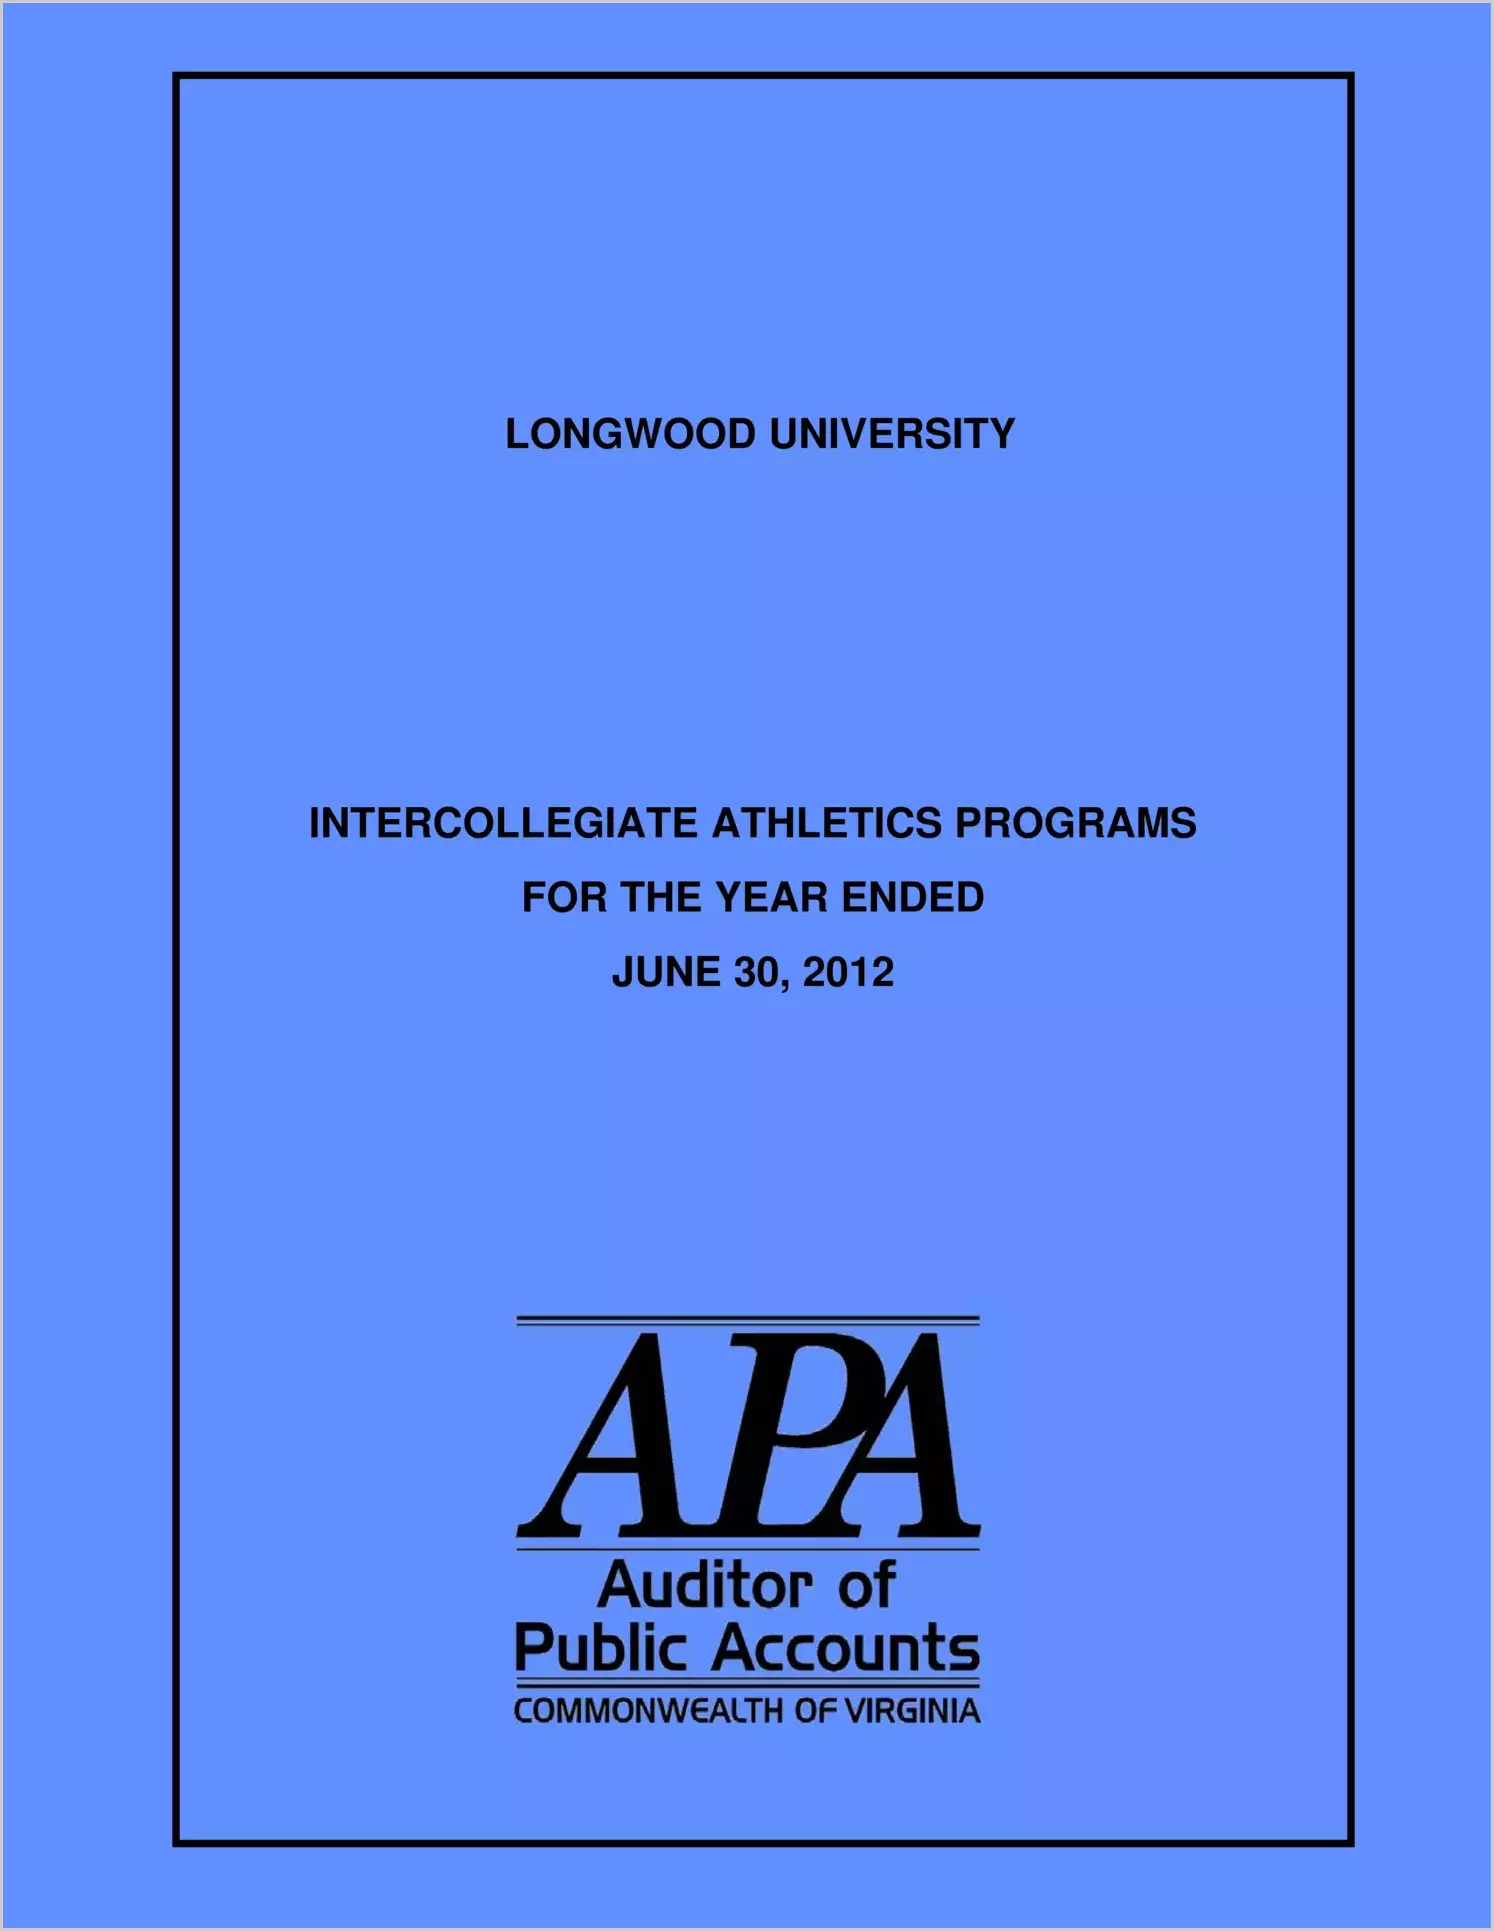 Longwood University Intercollegiate Athletics Programs report for the year ended June 30, 2012